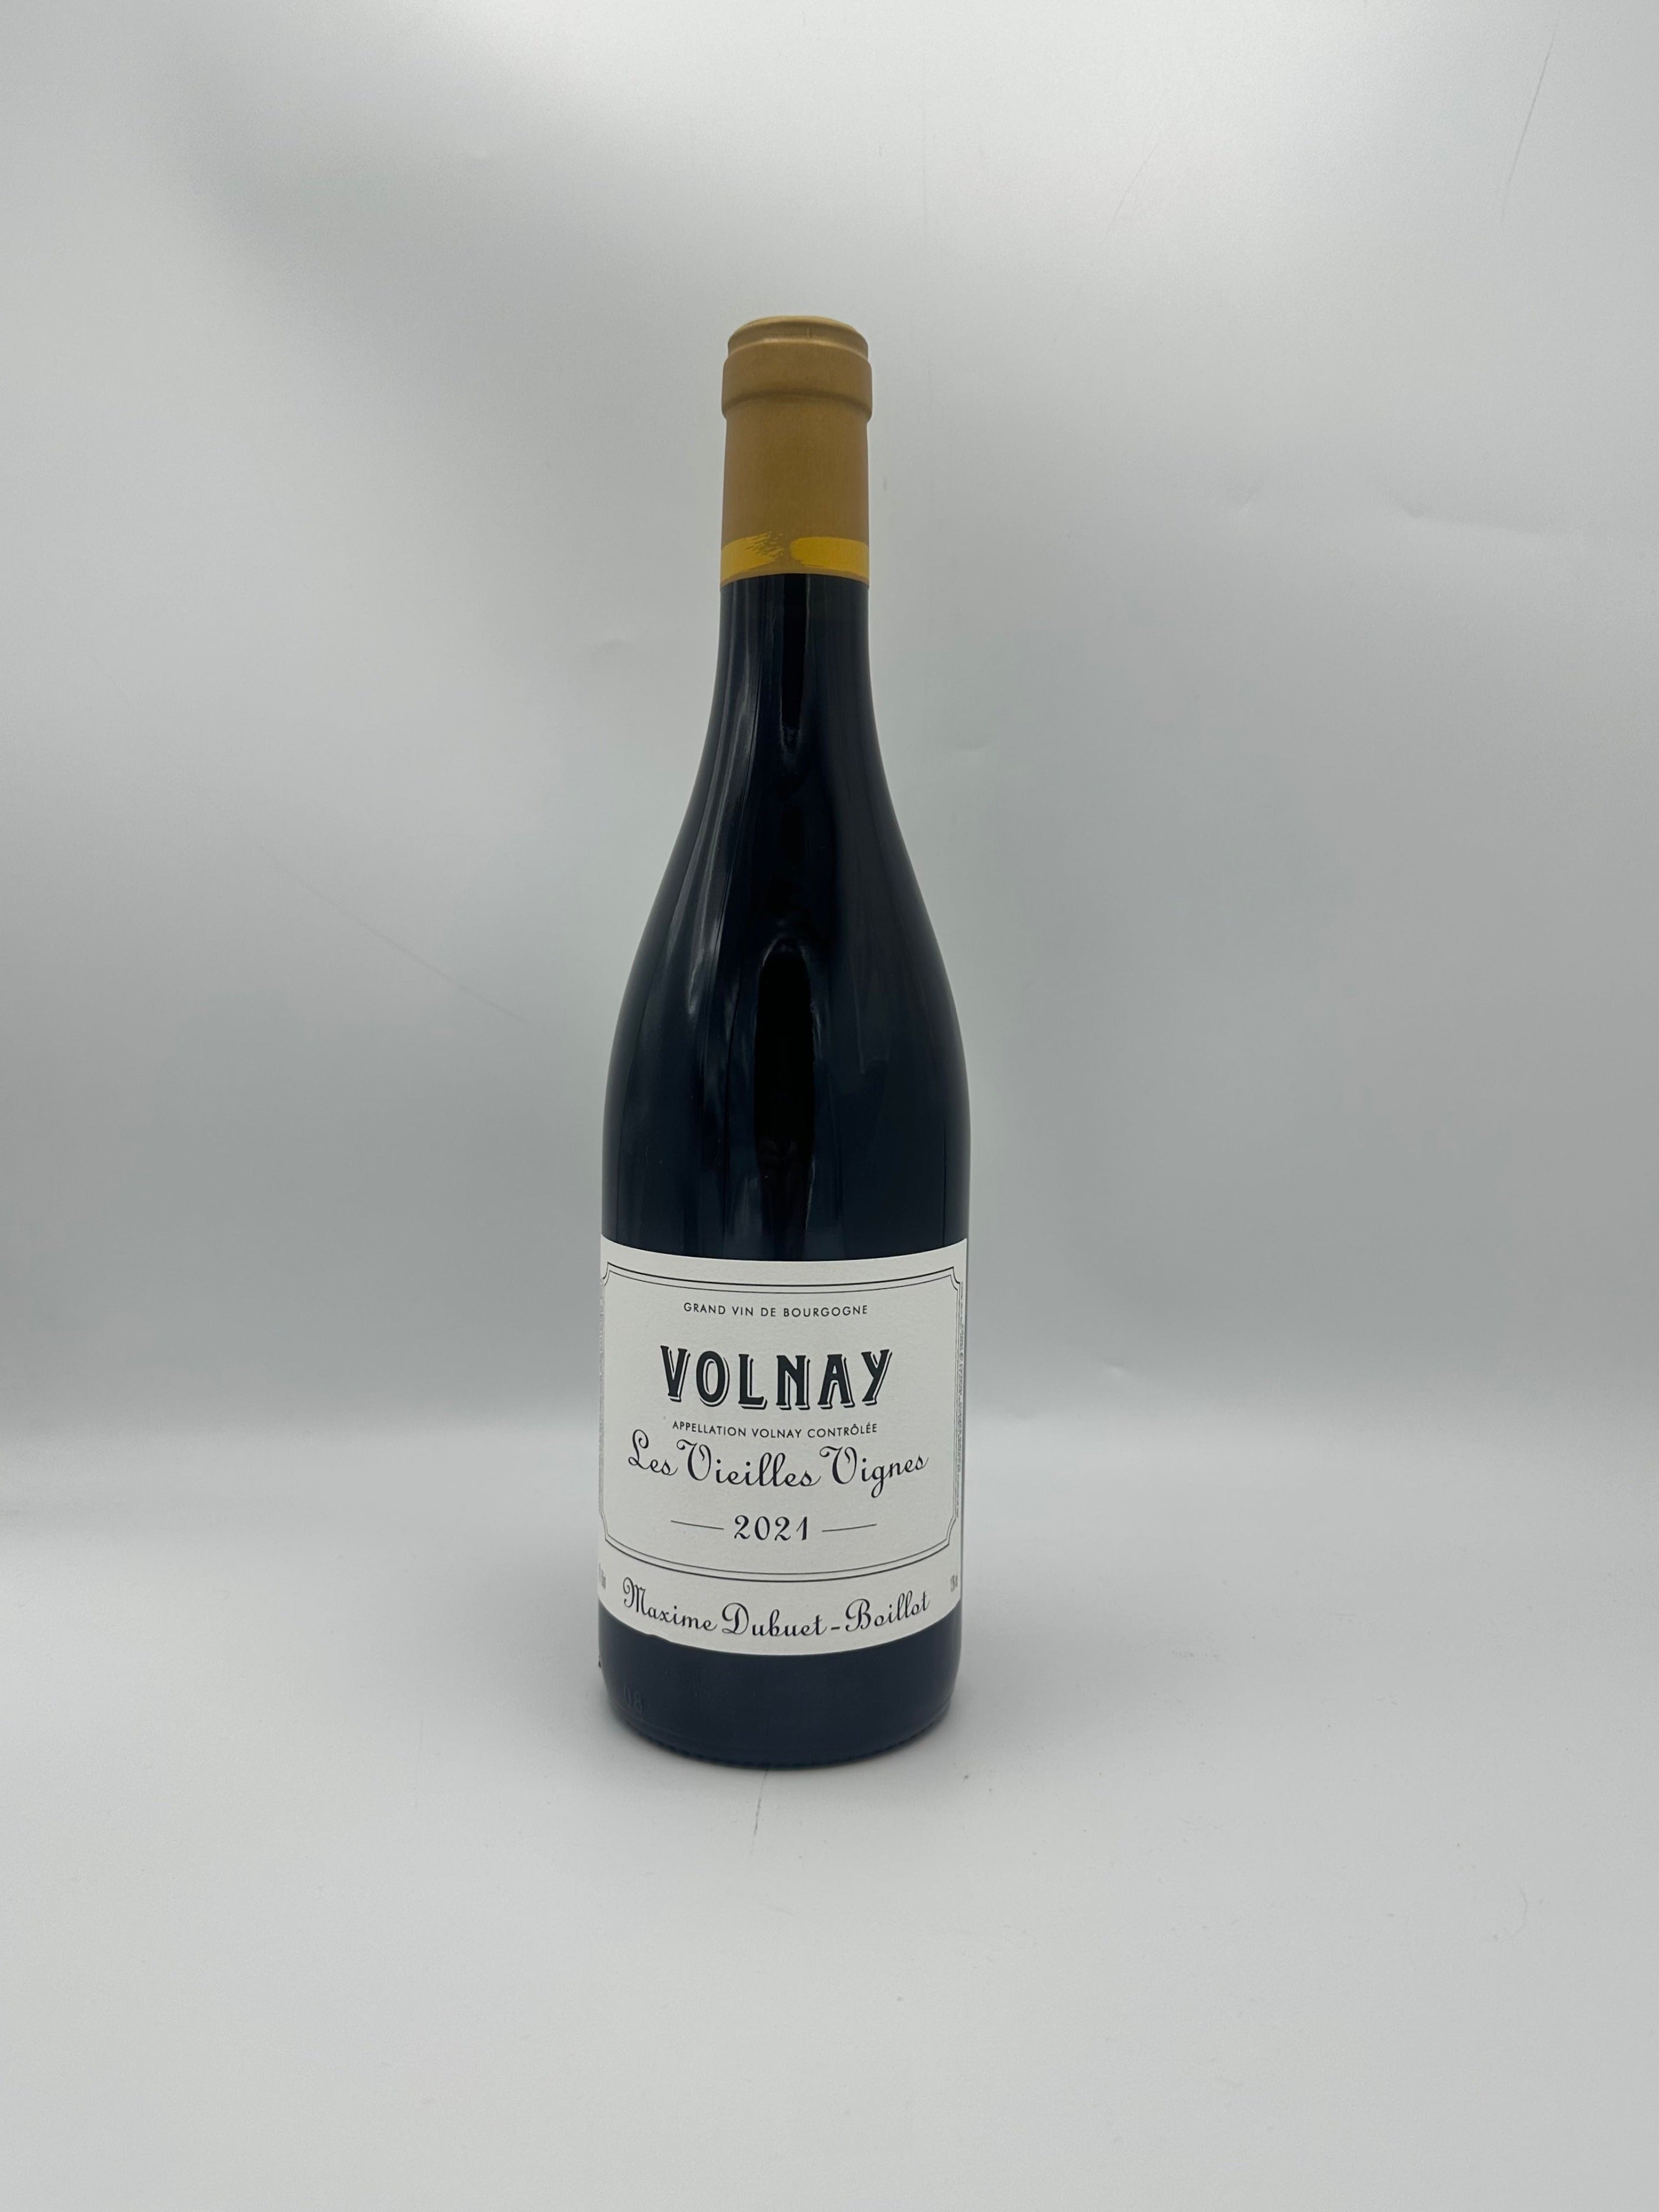 Volnay “Les Vieilles Vignes” 2022 Red - Maxime Dubuet Boillot 